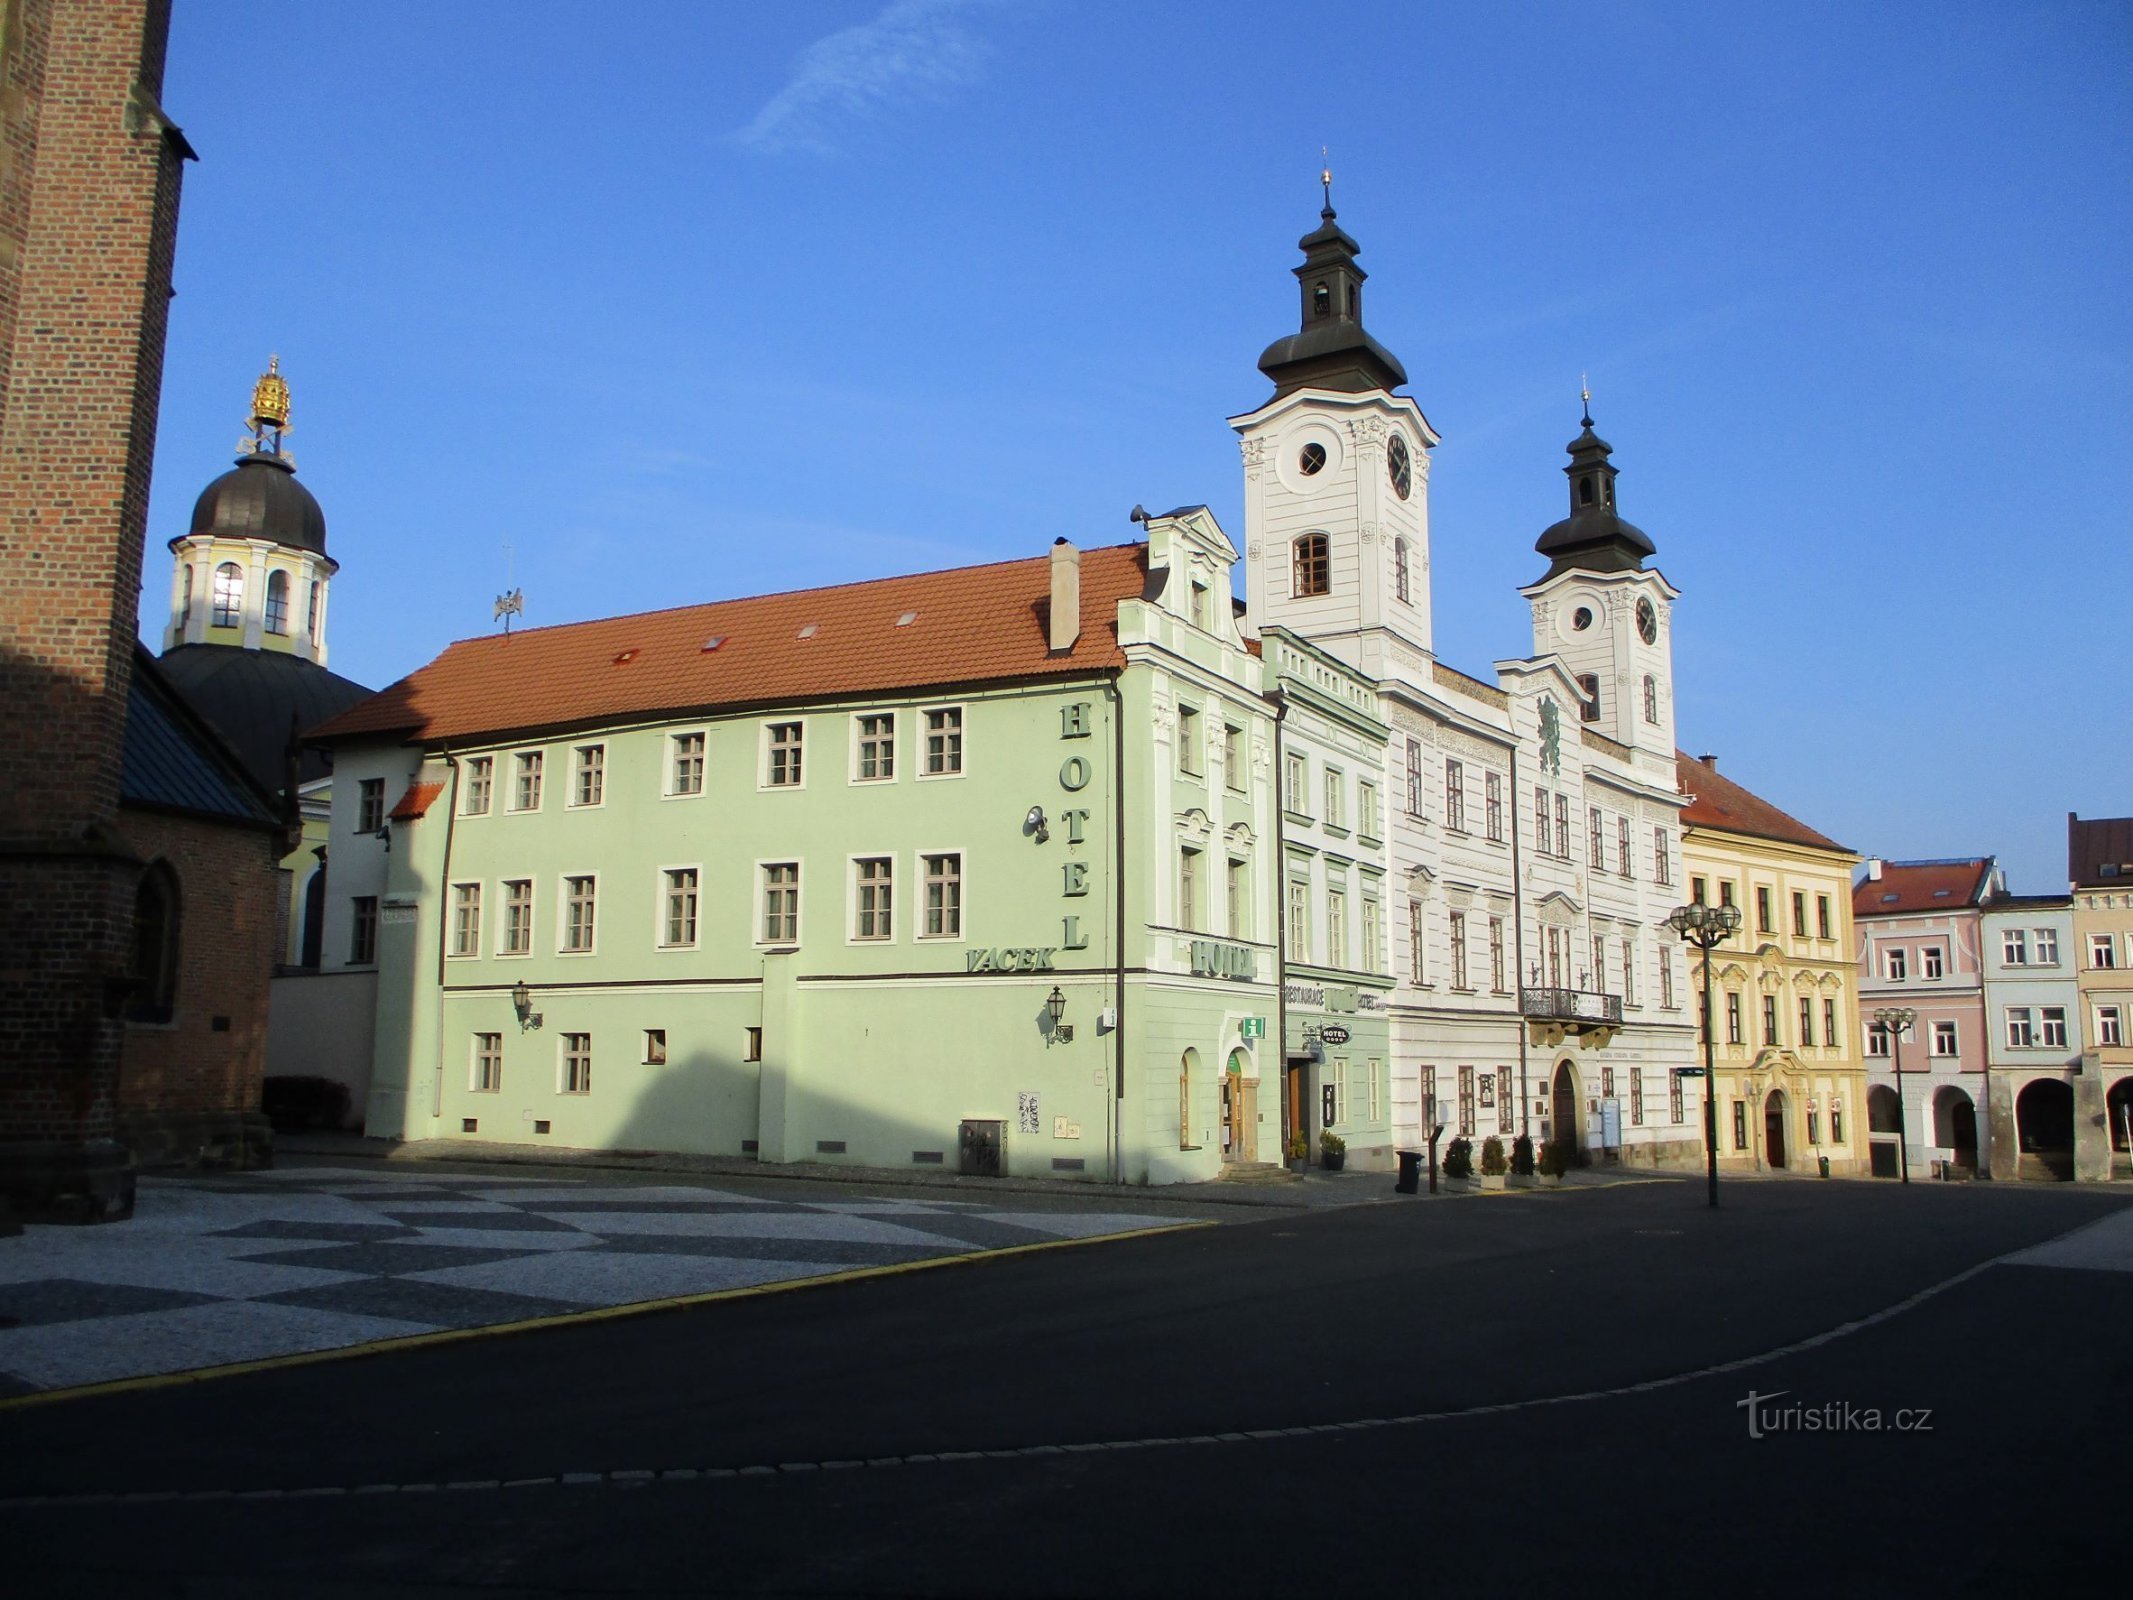 Velké náměstí dal n. 166 (Hradec Králové, 9.2.2020 febbraio XNUMX)